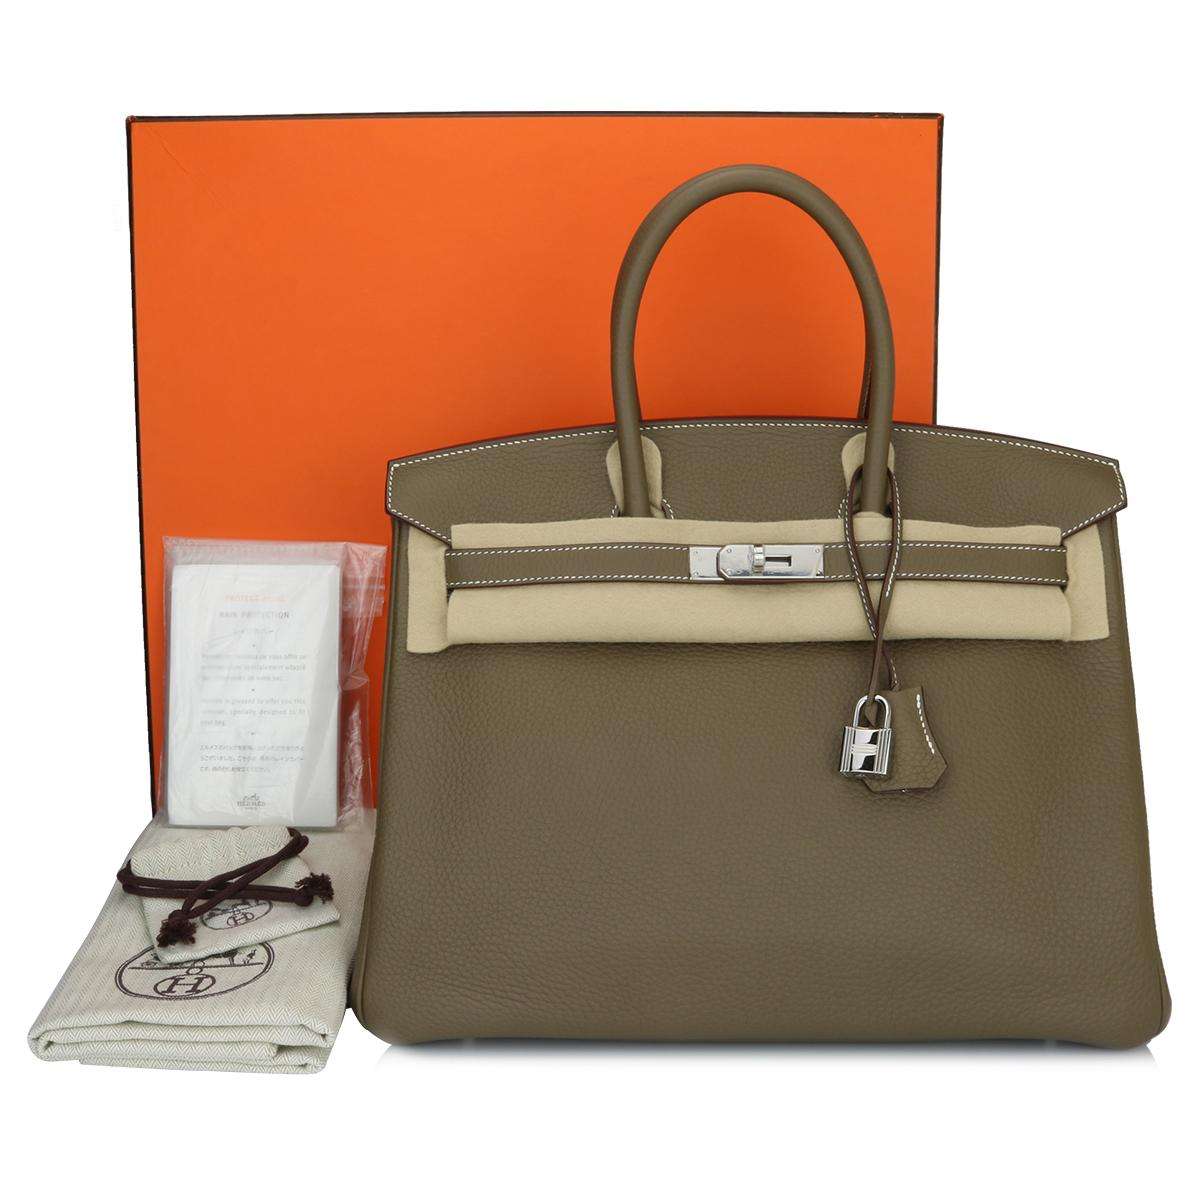 Hermès Birkin 35cm Bag Etoupe Togo Leather with Palladium Hardware Stamp C 2018 13